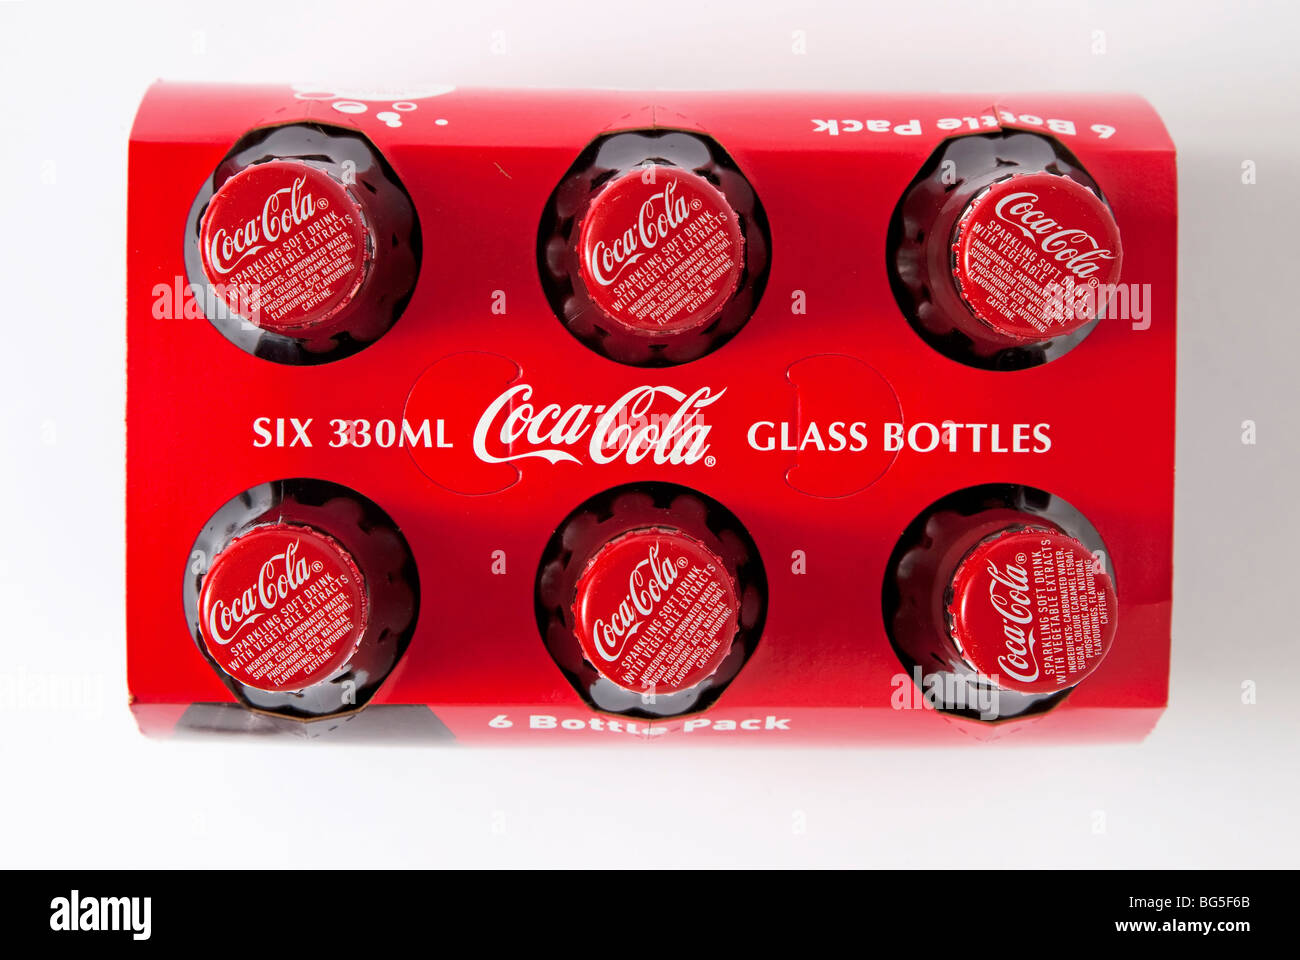 coca cola coke bottles bottle glass pack box Stock Photo